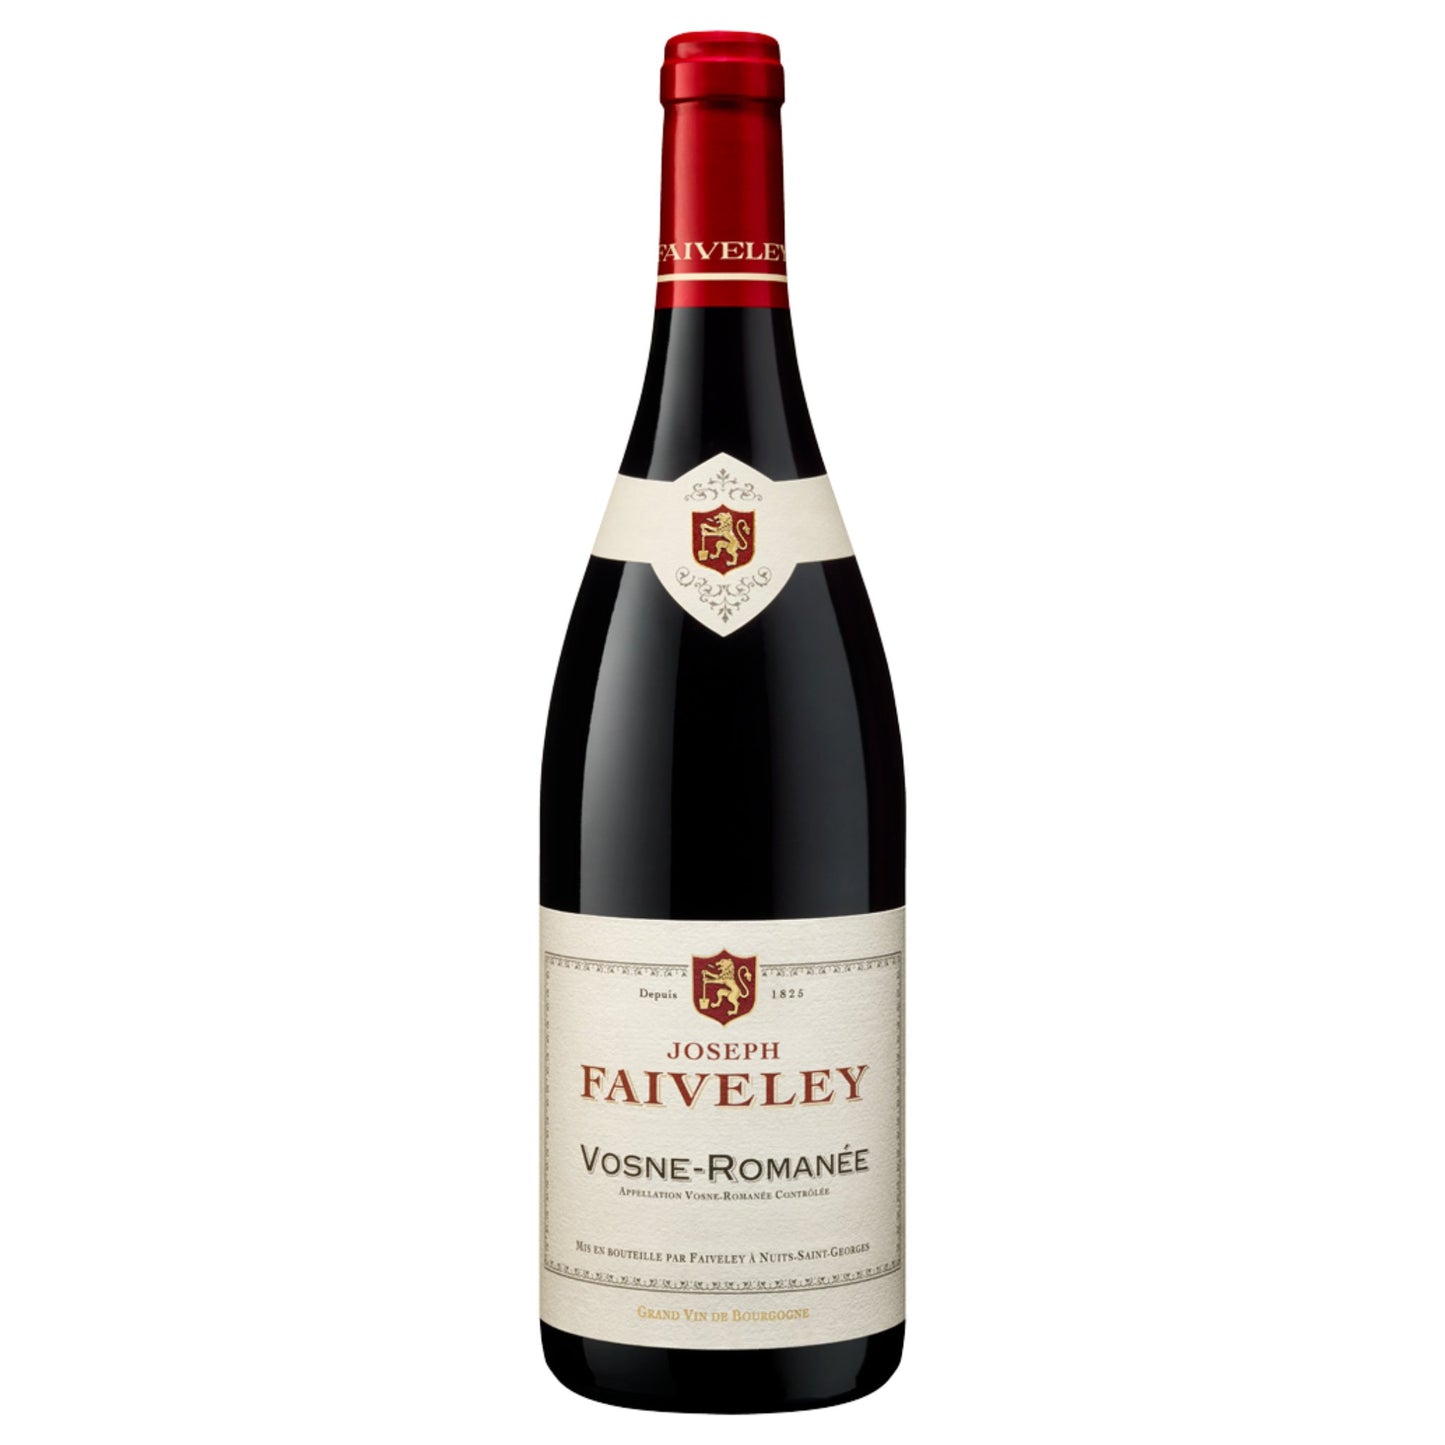 Faiveley Vosne Romanee - Grand Vin Pte Ltd